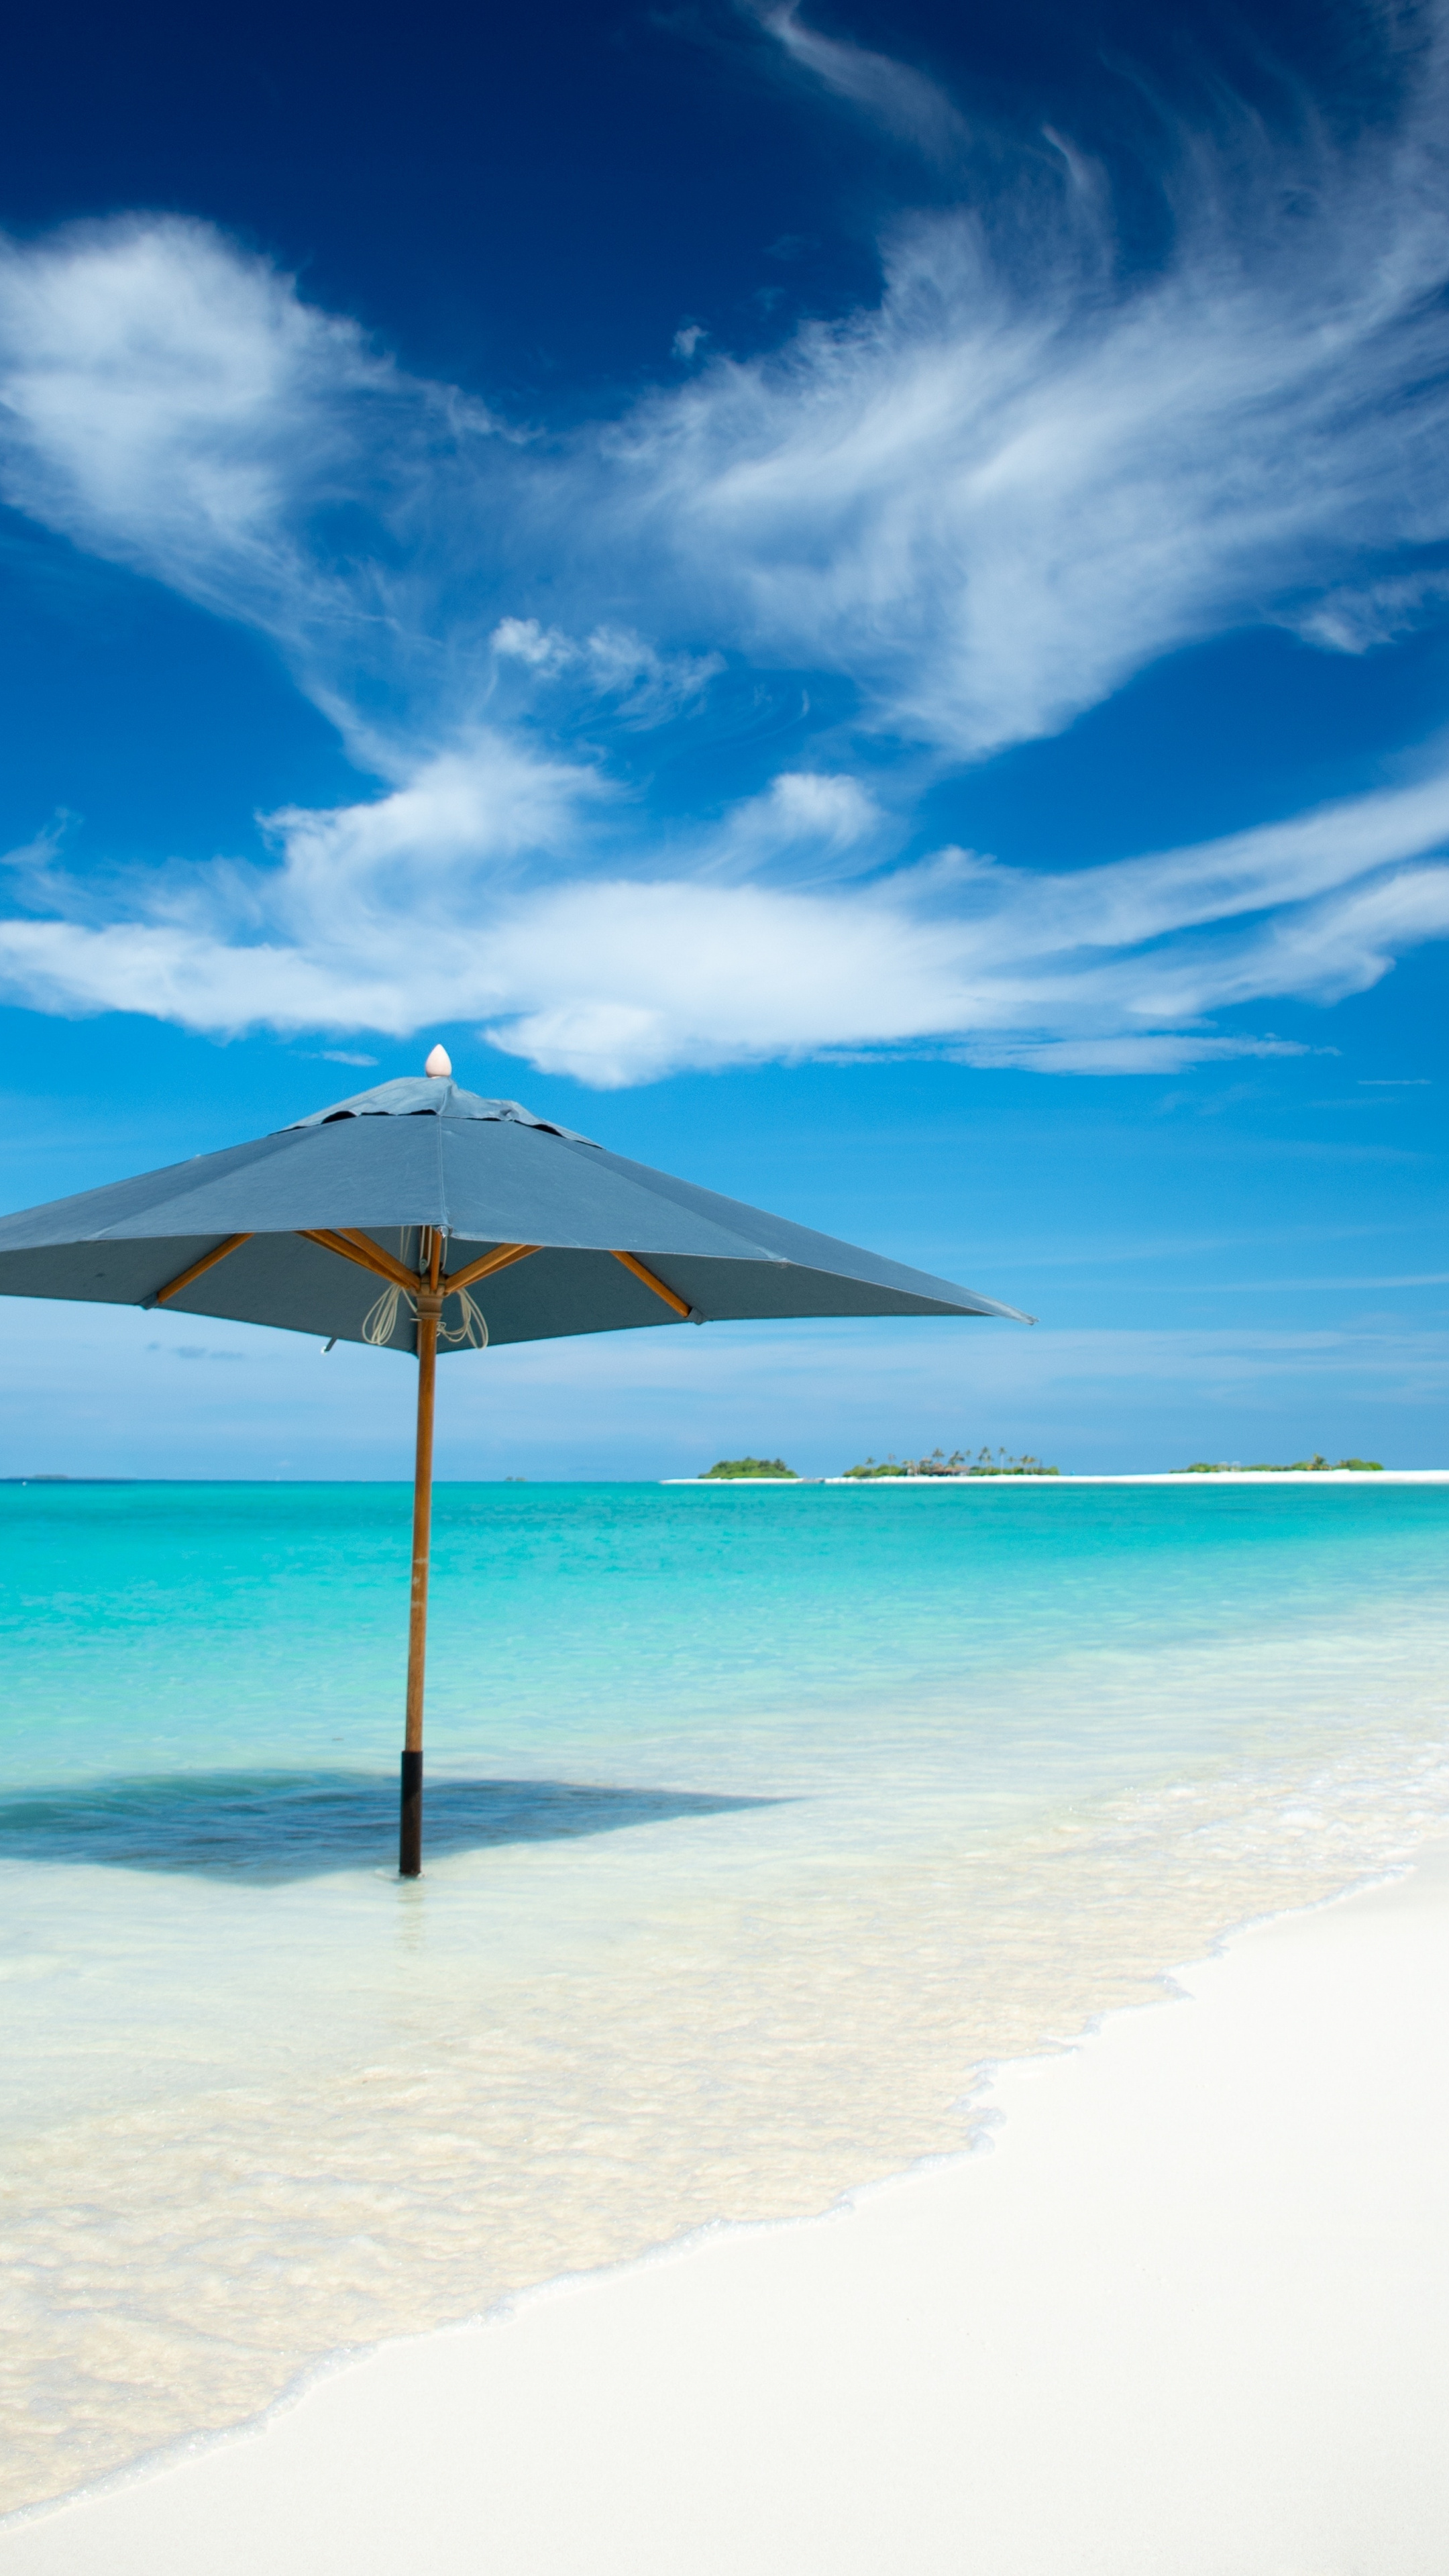 Beach Umbrella: Tropical island, Summer, A large sunshade, Coast, Sea. 2160x3840 4K Wallpaper.